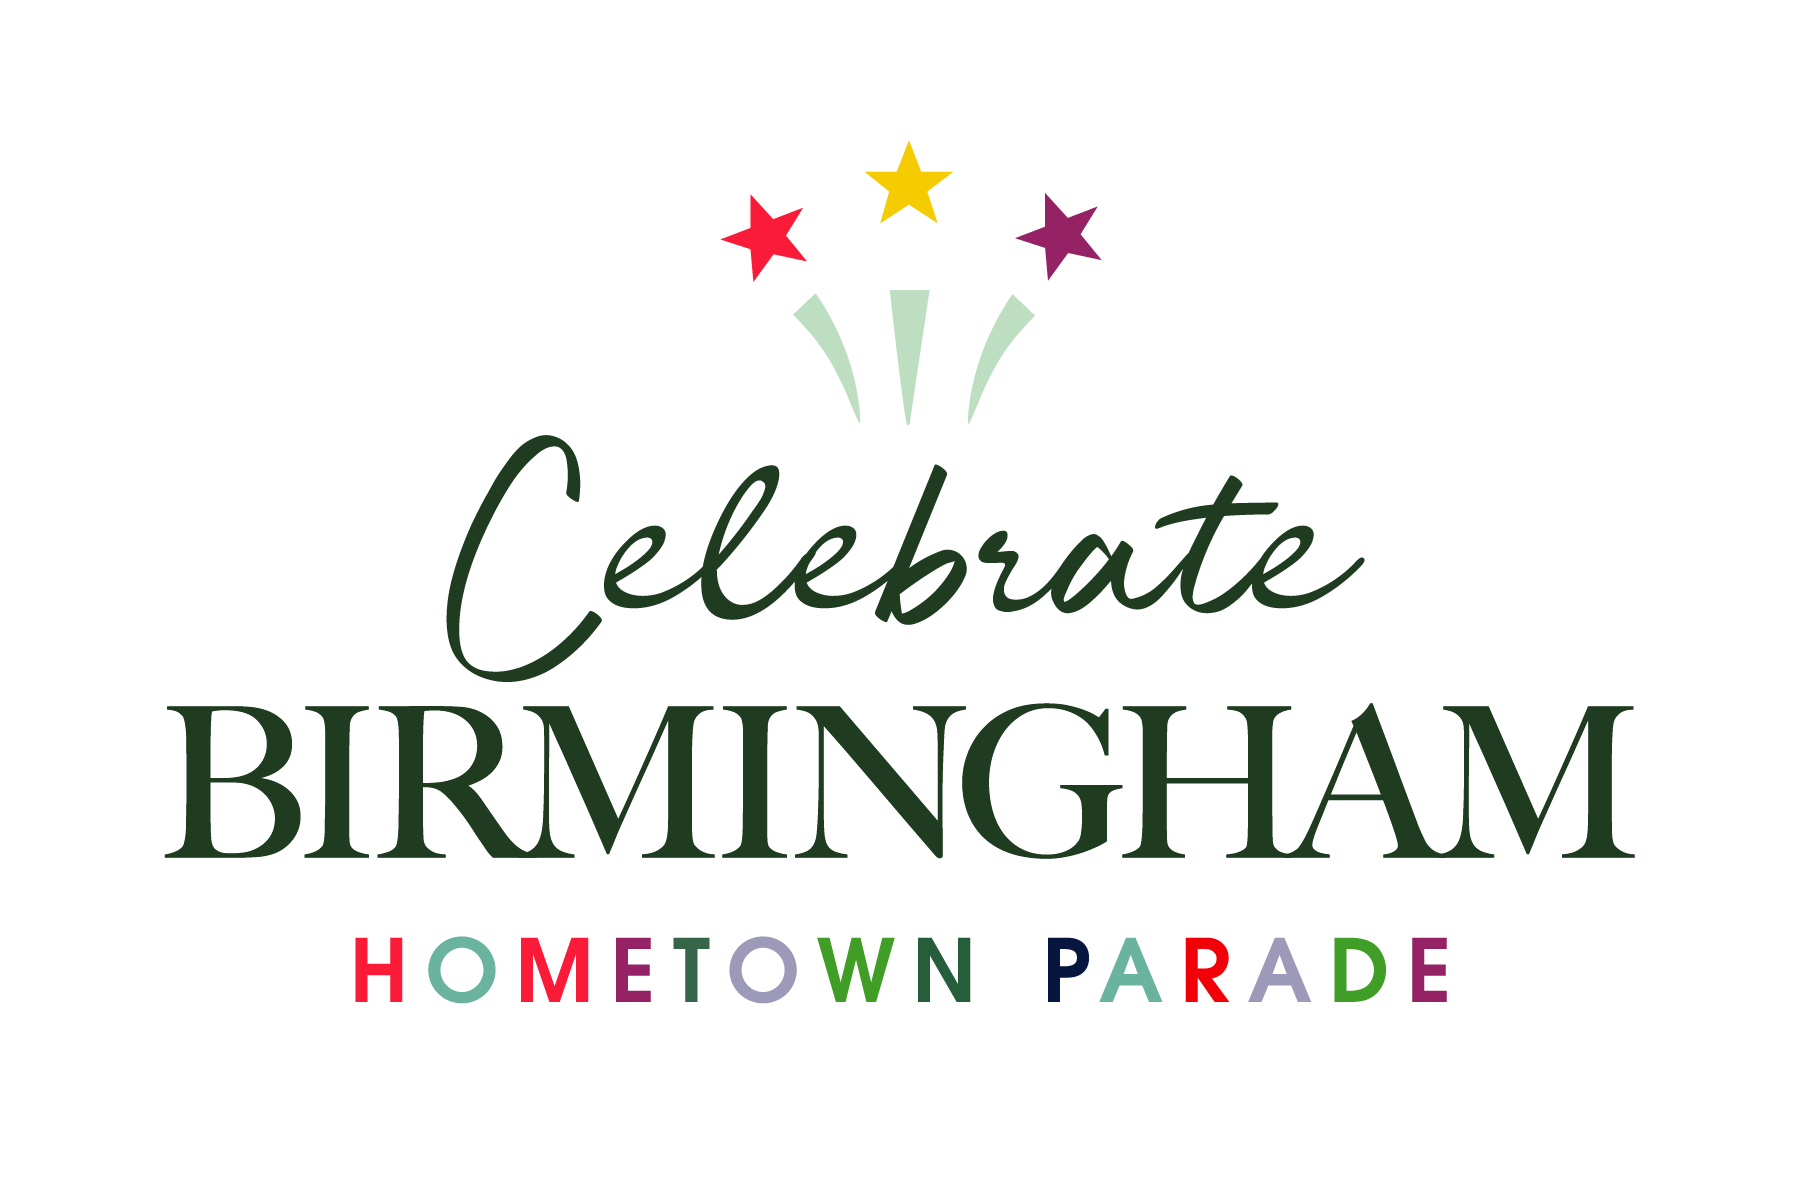 Celebrate Birmingham Hometown Parade logo vert